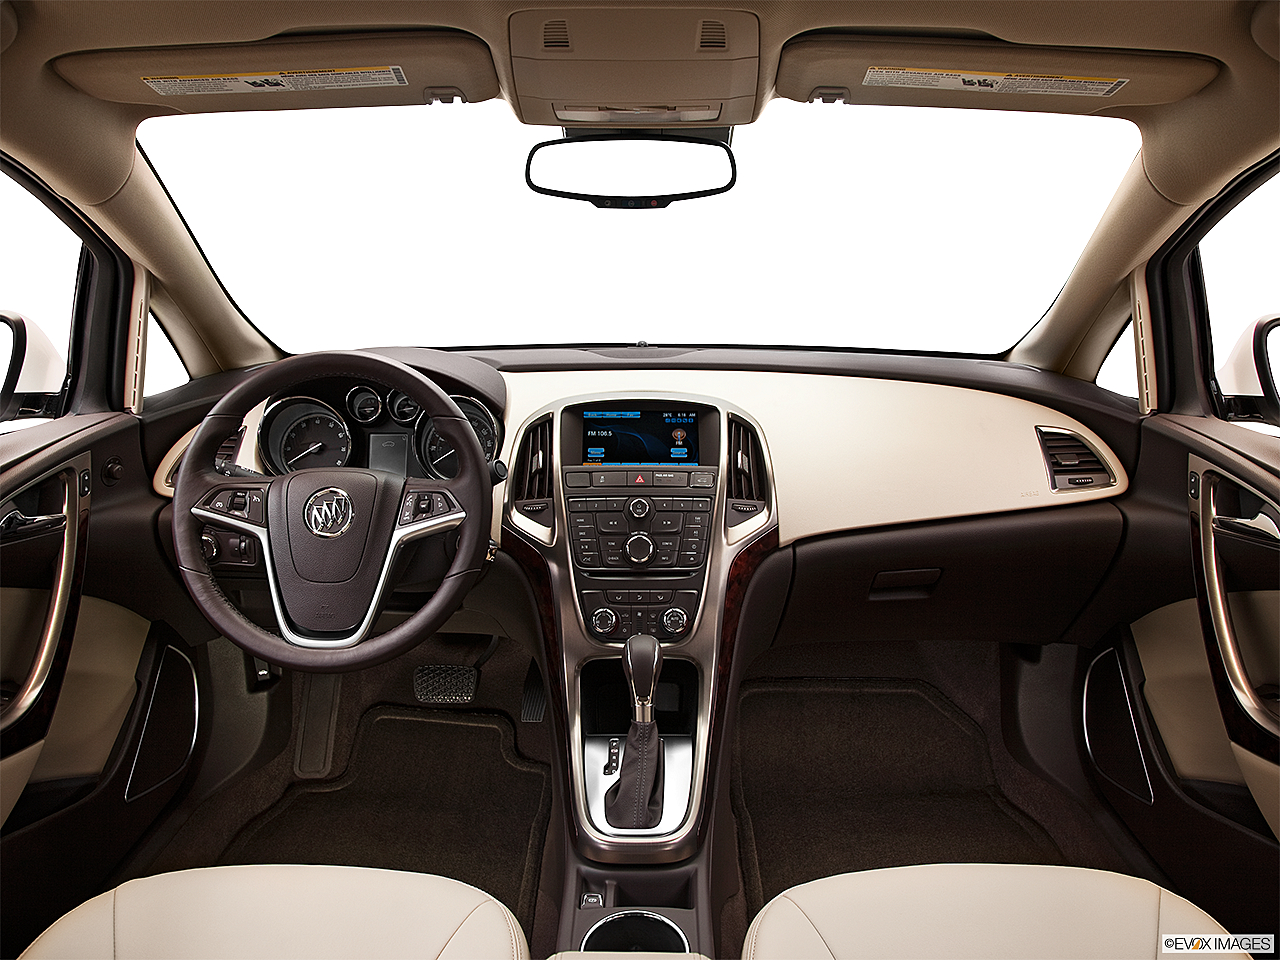 2013 Buick Verano Base 4dr Sedan - Research - GrooveCar